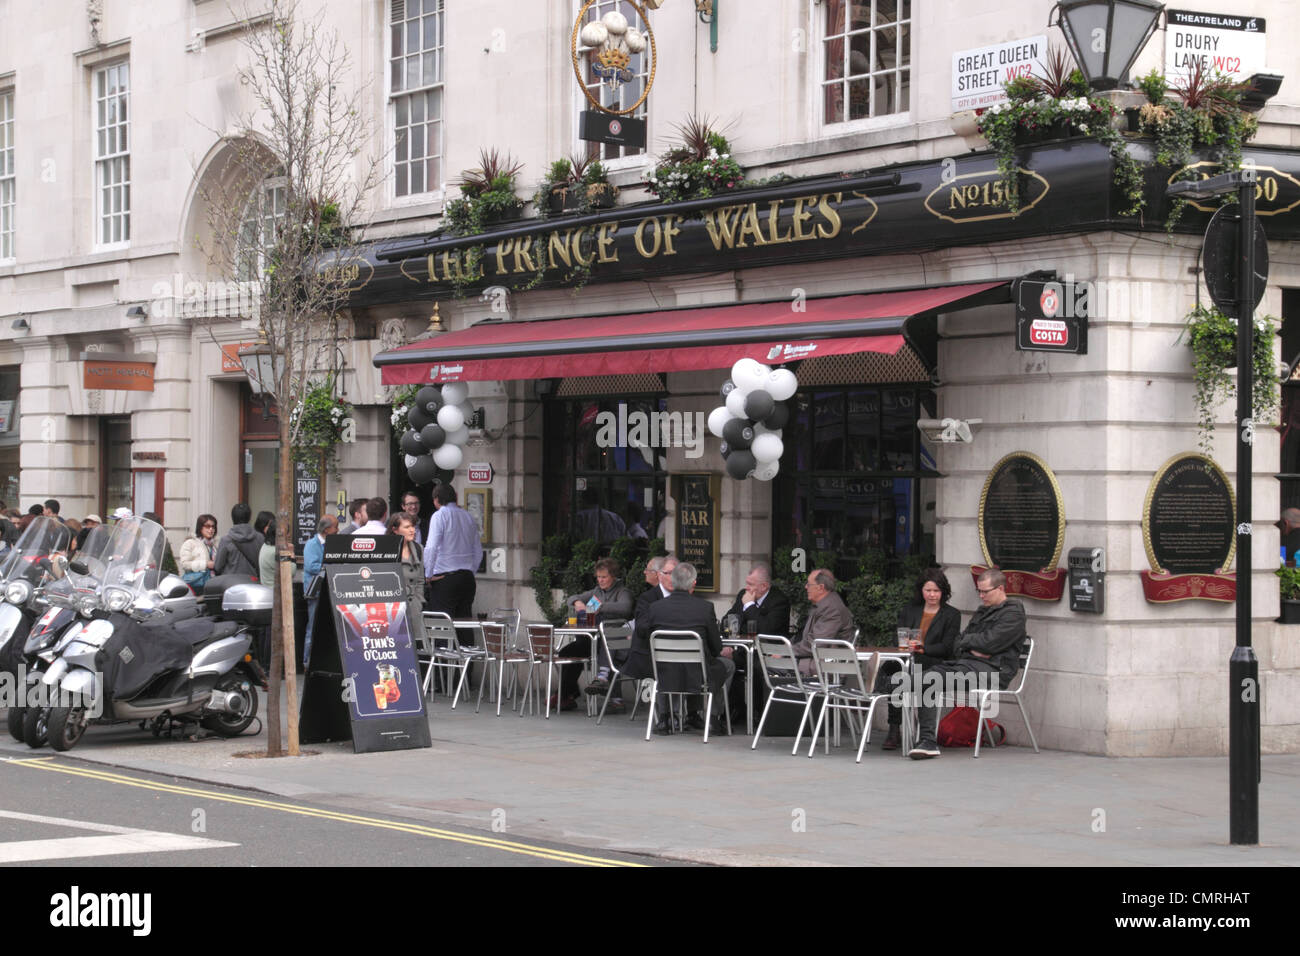 Die Prince Of Wales Pub Drury Lane Covent Garden in London Stockfoto